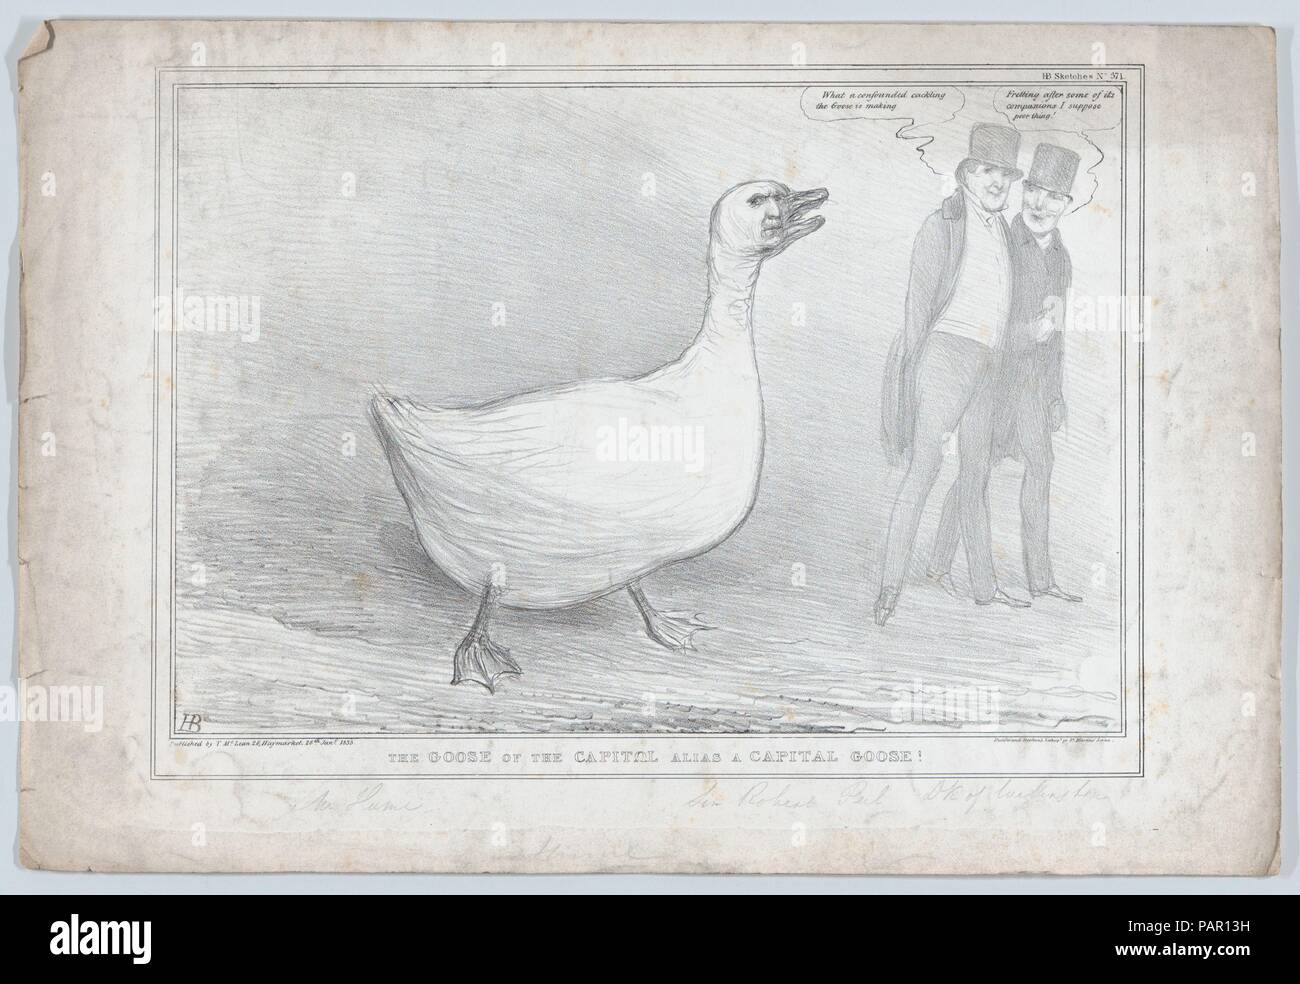 The Goose of the Capitol Alias a Capital Goose!. Artist: John Doyle (Irish, Dublin 1797-1868 London). Dimensions: Sheet: 11 3/4 × 17 7/16 in. (29.8 × 44.3 cm). Lithographer: Ducôte and Stephen (British, active 1830-40). Publisher: Thomas McLean (British, active London 1788-1885). Series/Portfolio: HB Sketches, No. 371. Subject: Arthur Wellesley, 1st Duke of Wellington (British, 1769-1852); Sir Robert Peel (British, Bury, 1788-1850); Joseph Hume (British, 1777-1855). Date: January 26, 1835. Museum: Metropolitan Museum of Art, New York, USA. Stock Photo